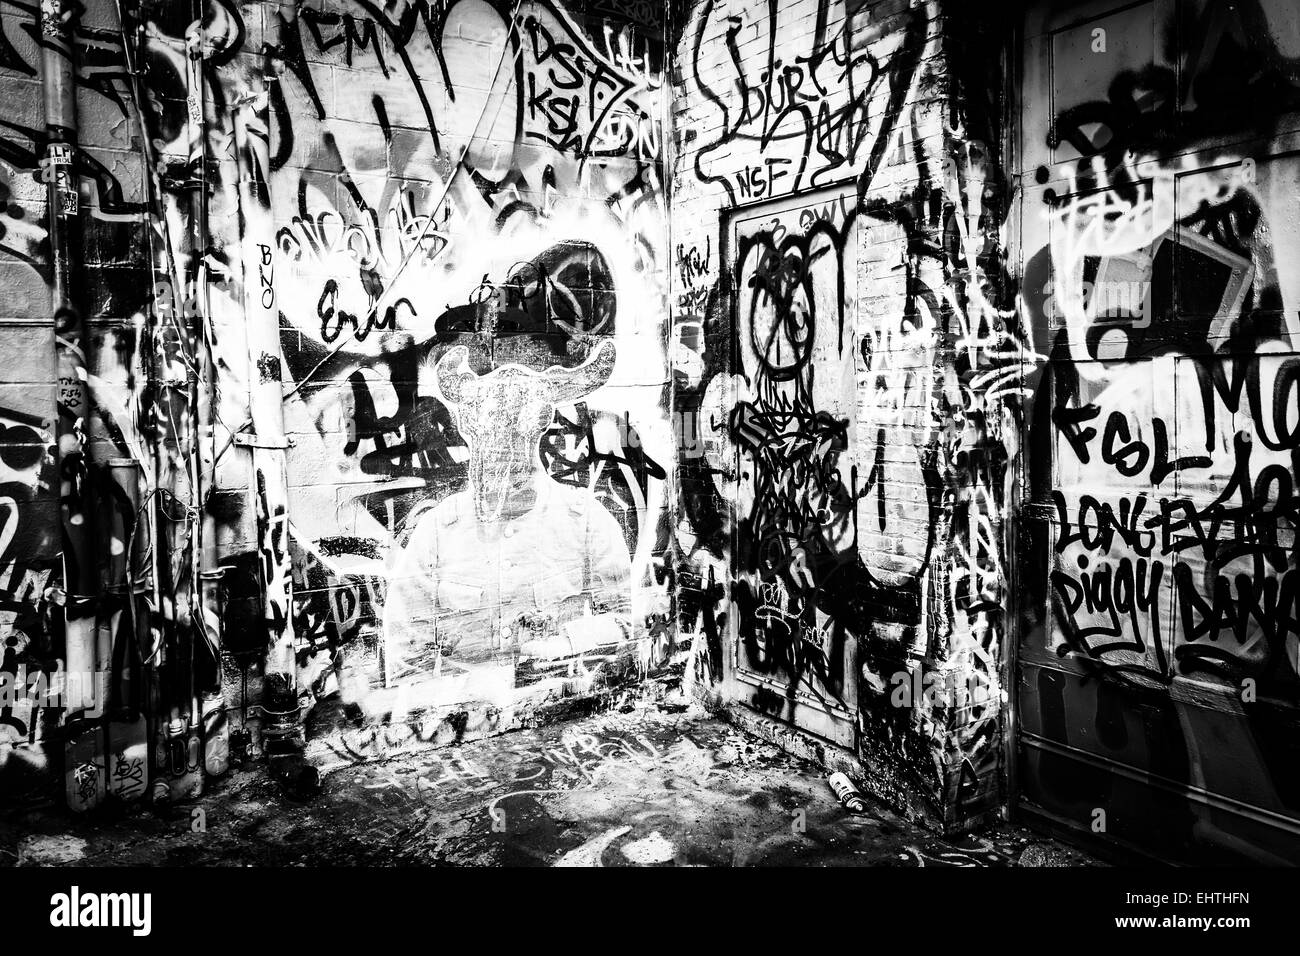 Designs in Graffiti Alley, Baltimore, Maryland. Stock Photo